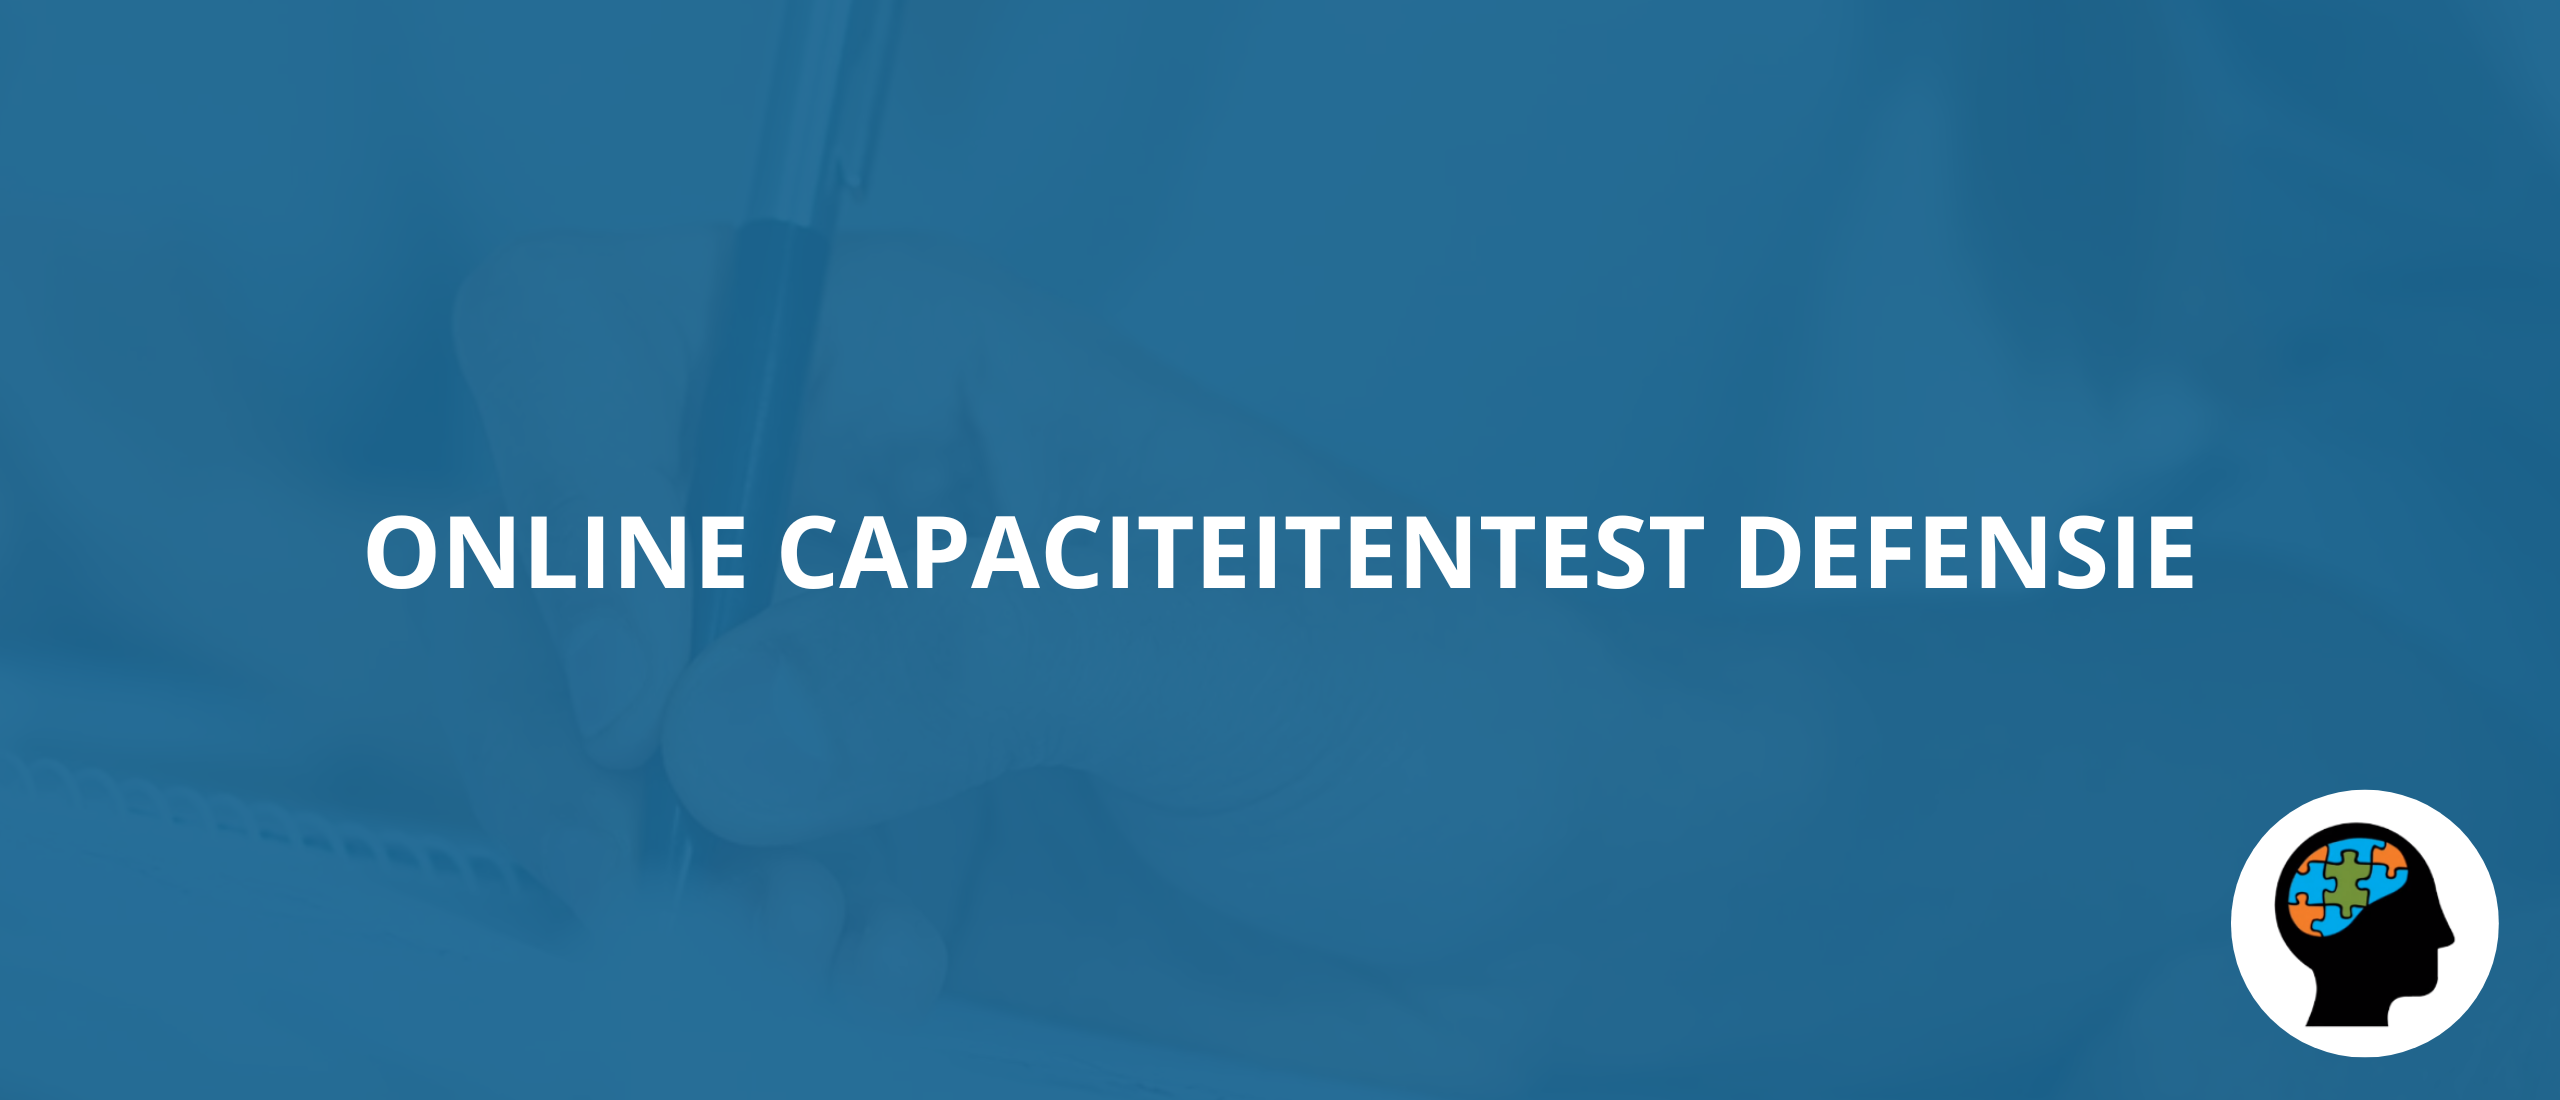 Online capaciteitentest defensie